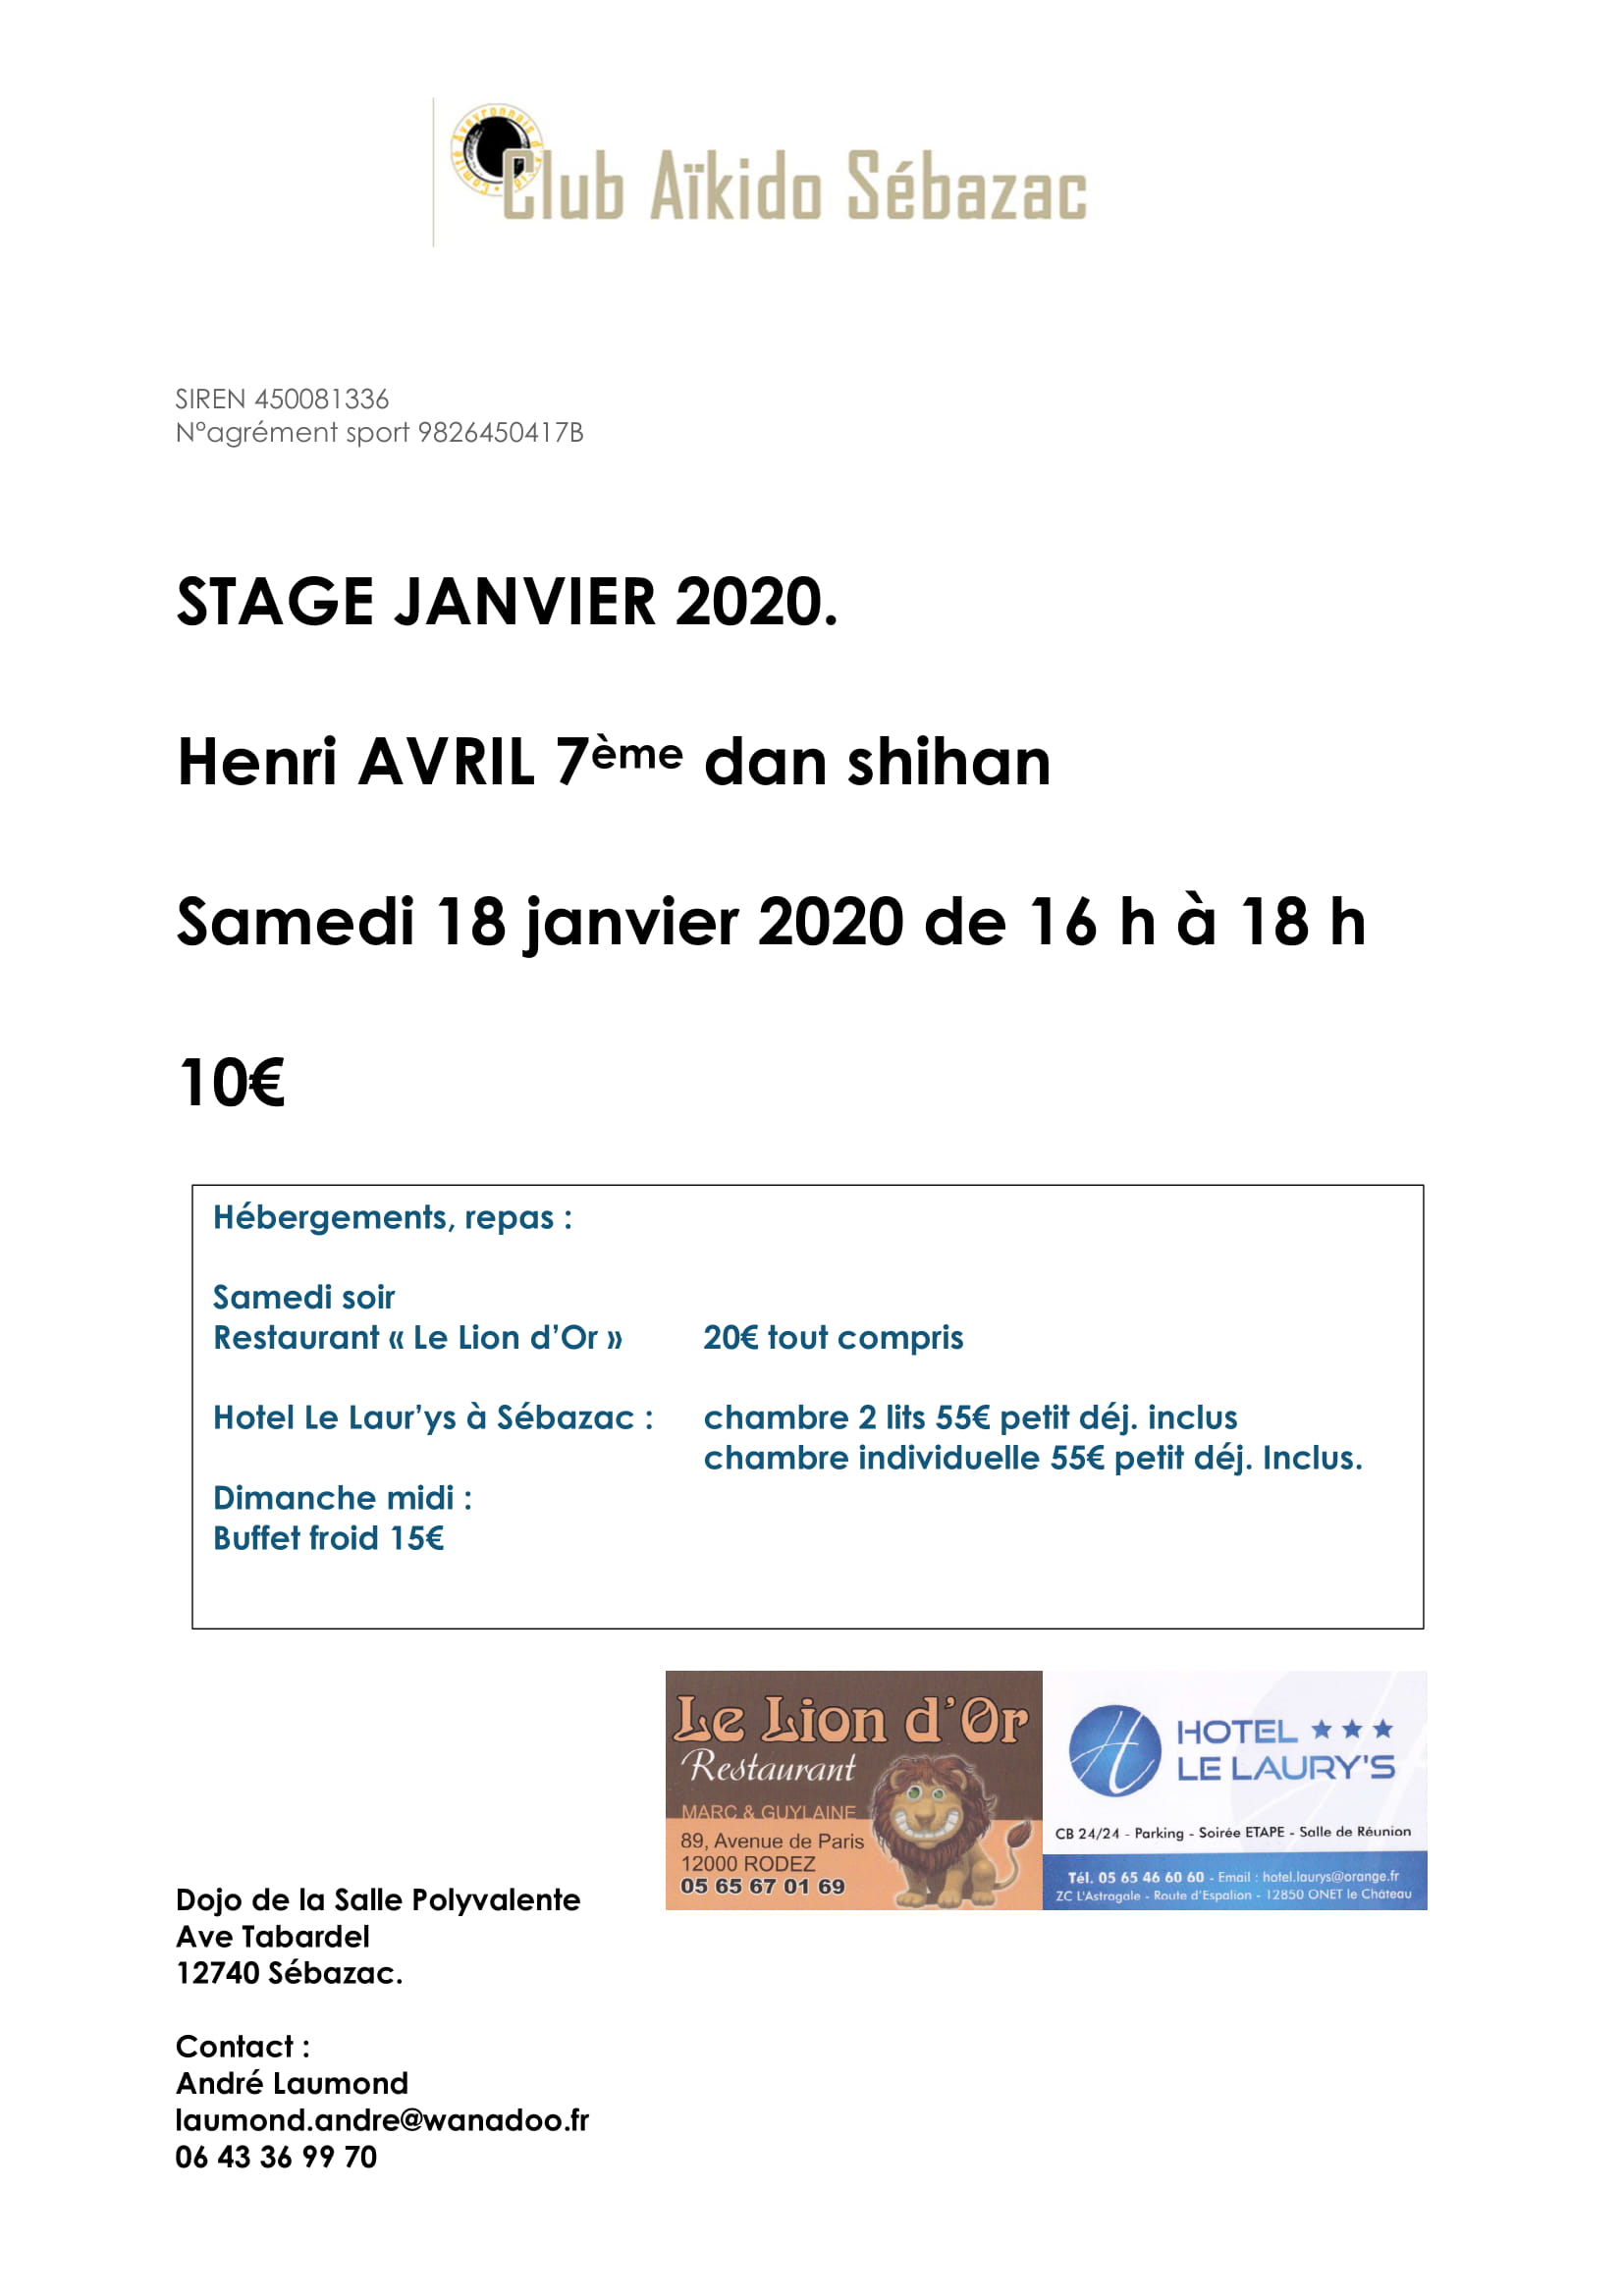 Stage samedi 18 janvier à Sebazac avec Henri Avril Shihan 7ème dan